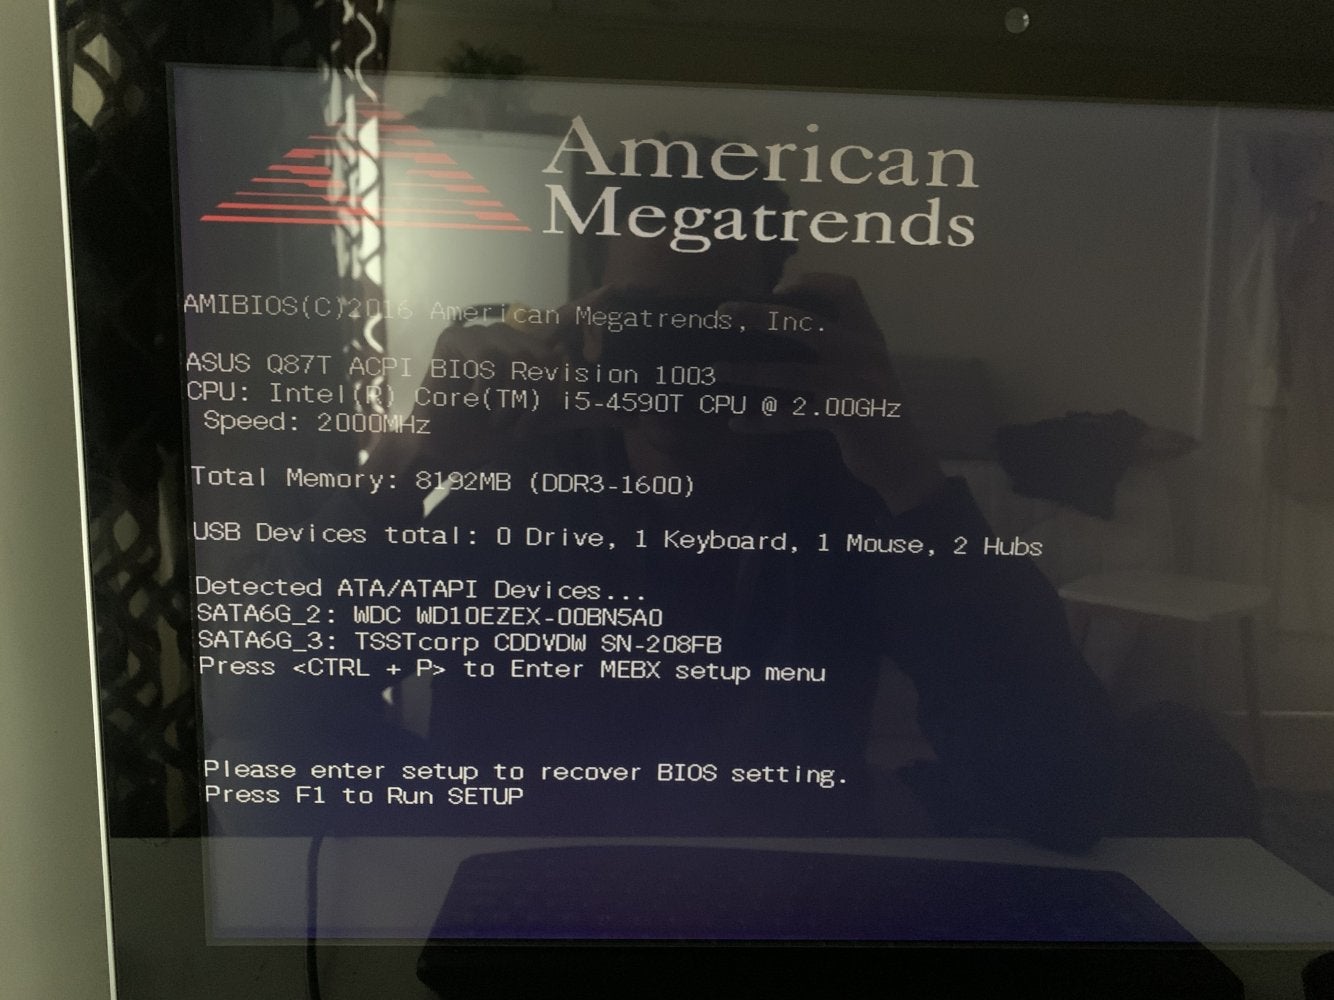 Press F1 to Run SETUP won't work on American Megatrends screen : r/pchelp